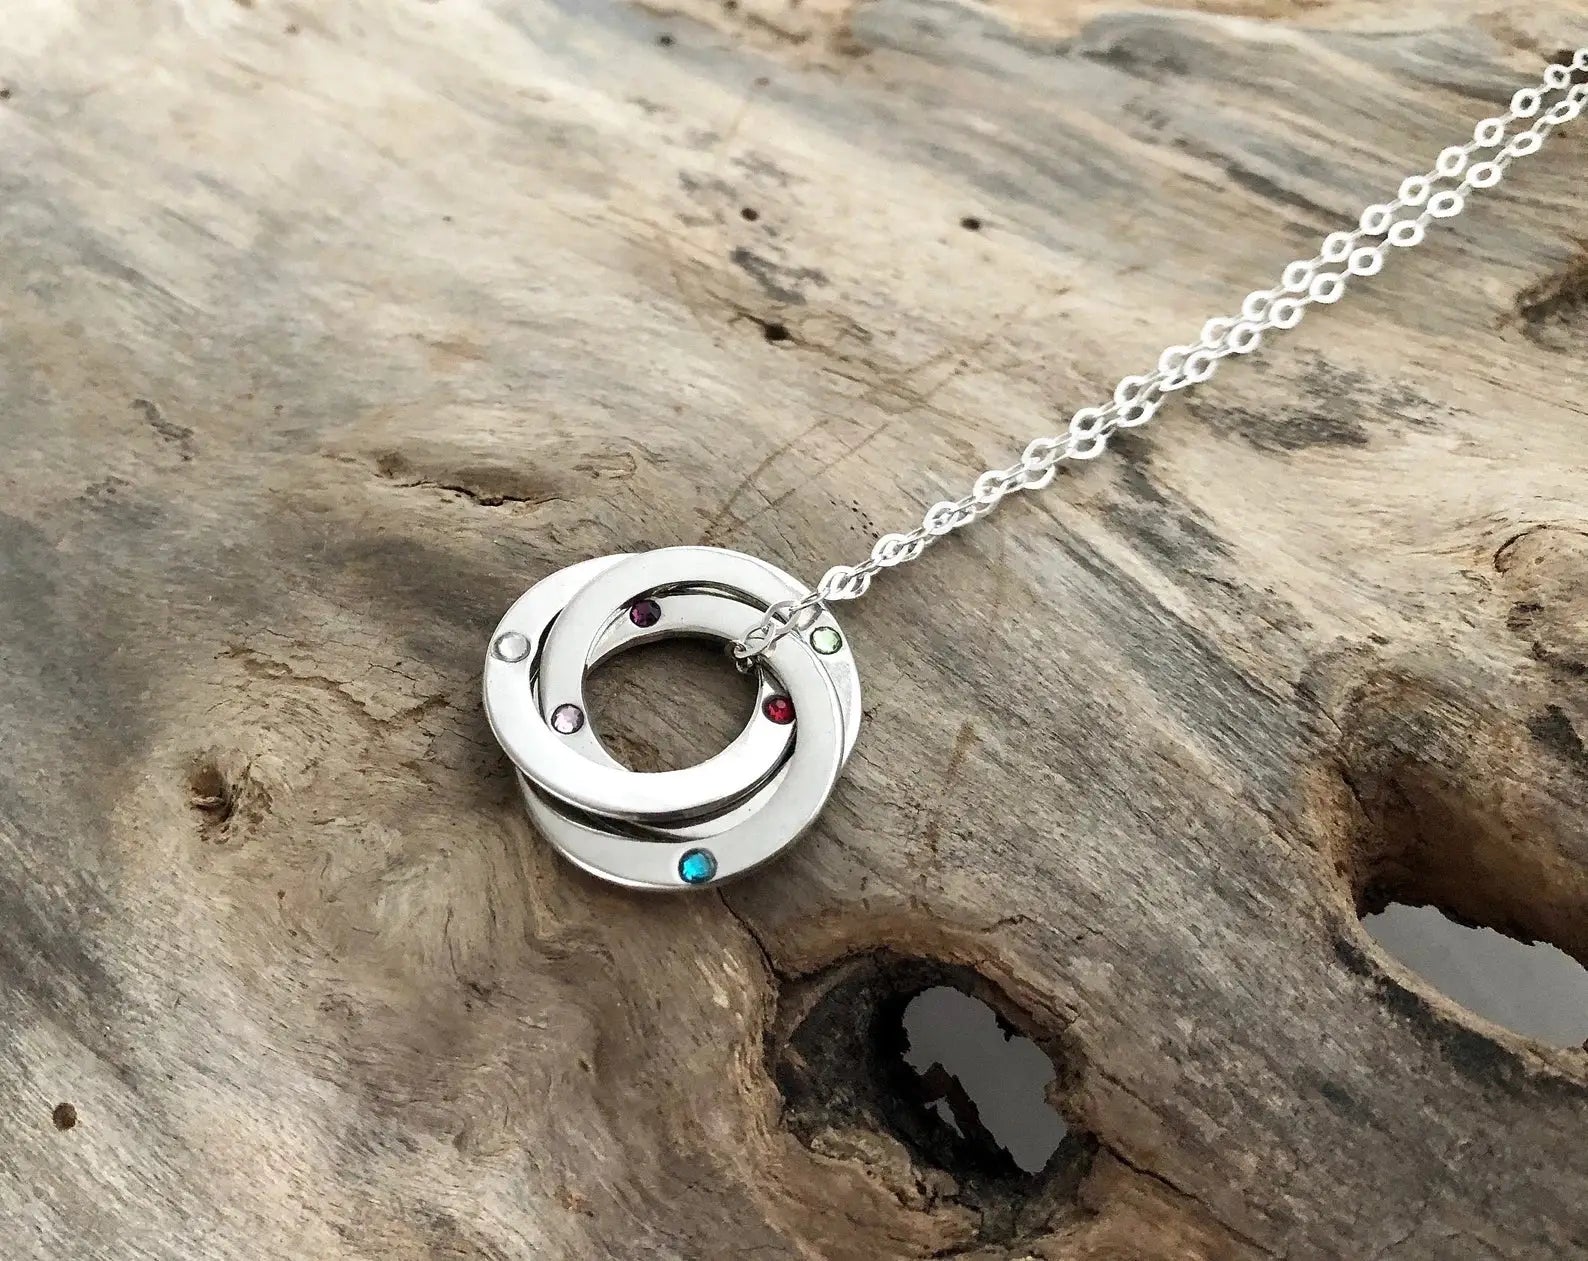 Avanti Interlocking Circle Necklace in Silver & Rose Gold | Fine Jewellery